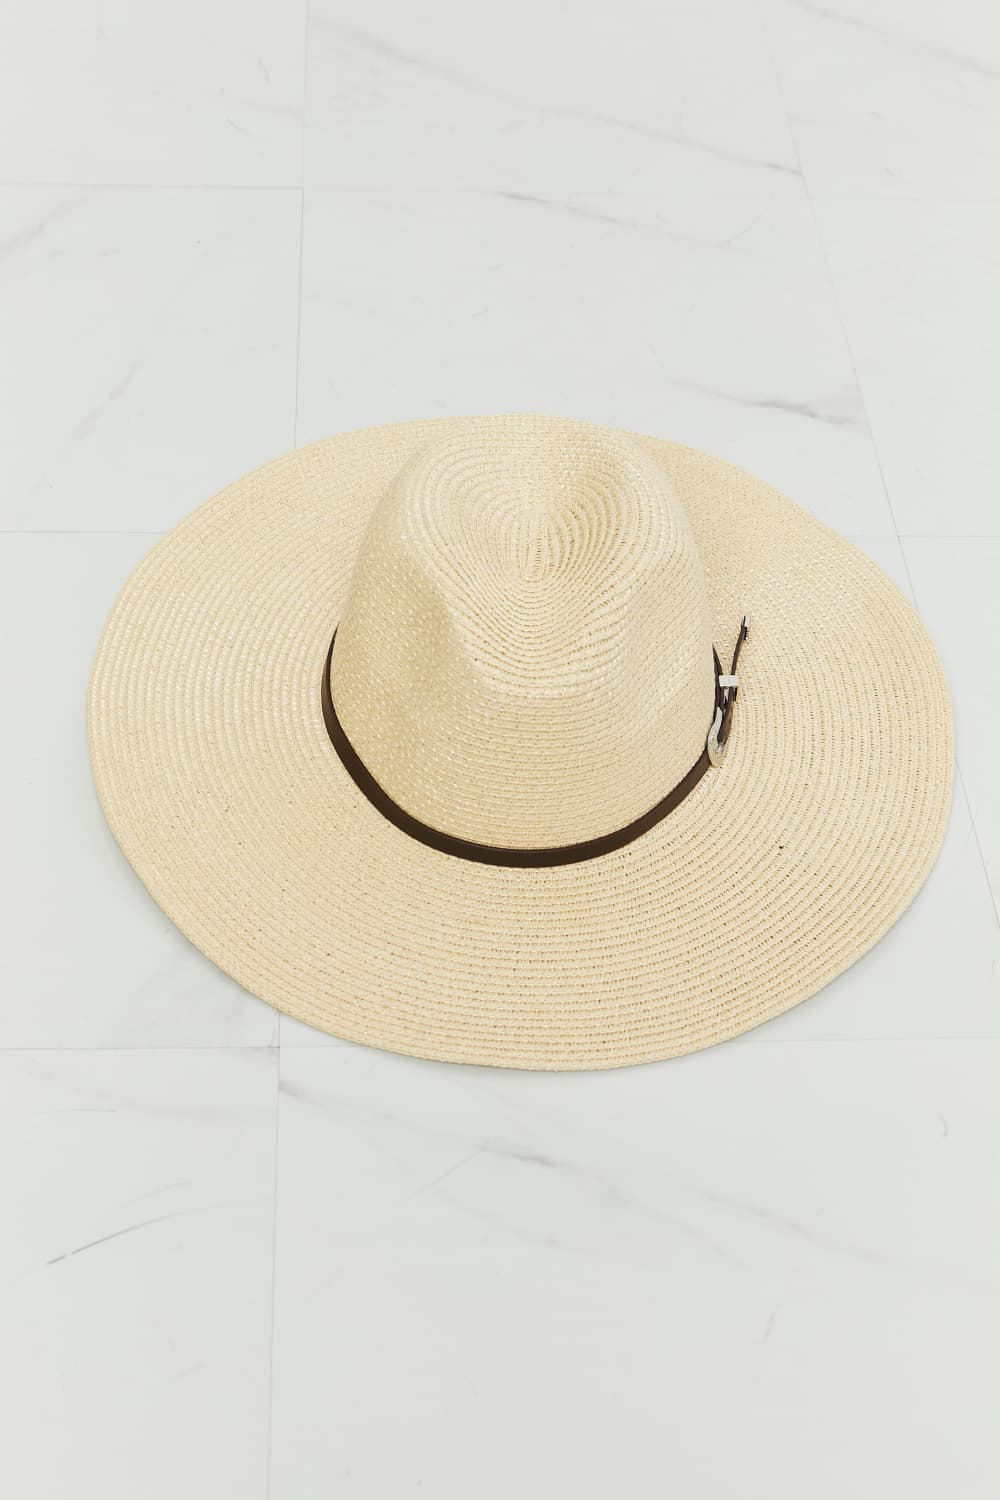 Fame Boho Summer Straw Fedora Hat Print on any thing USA/STOD clothes